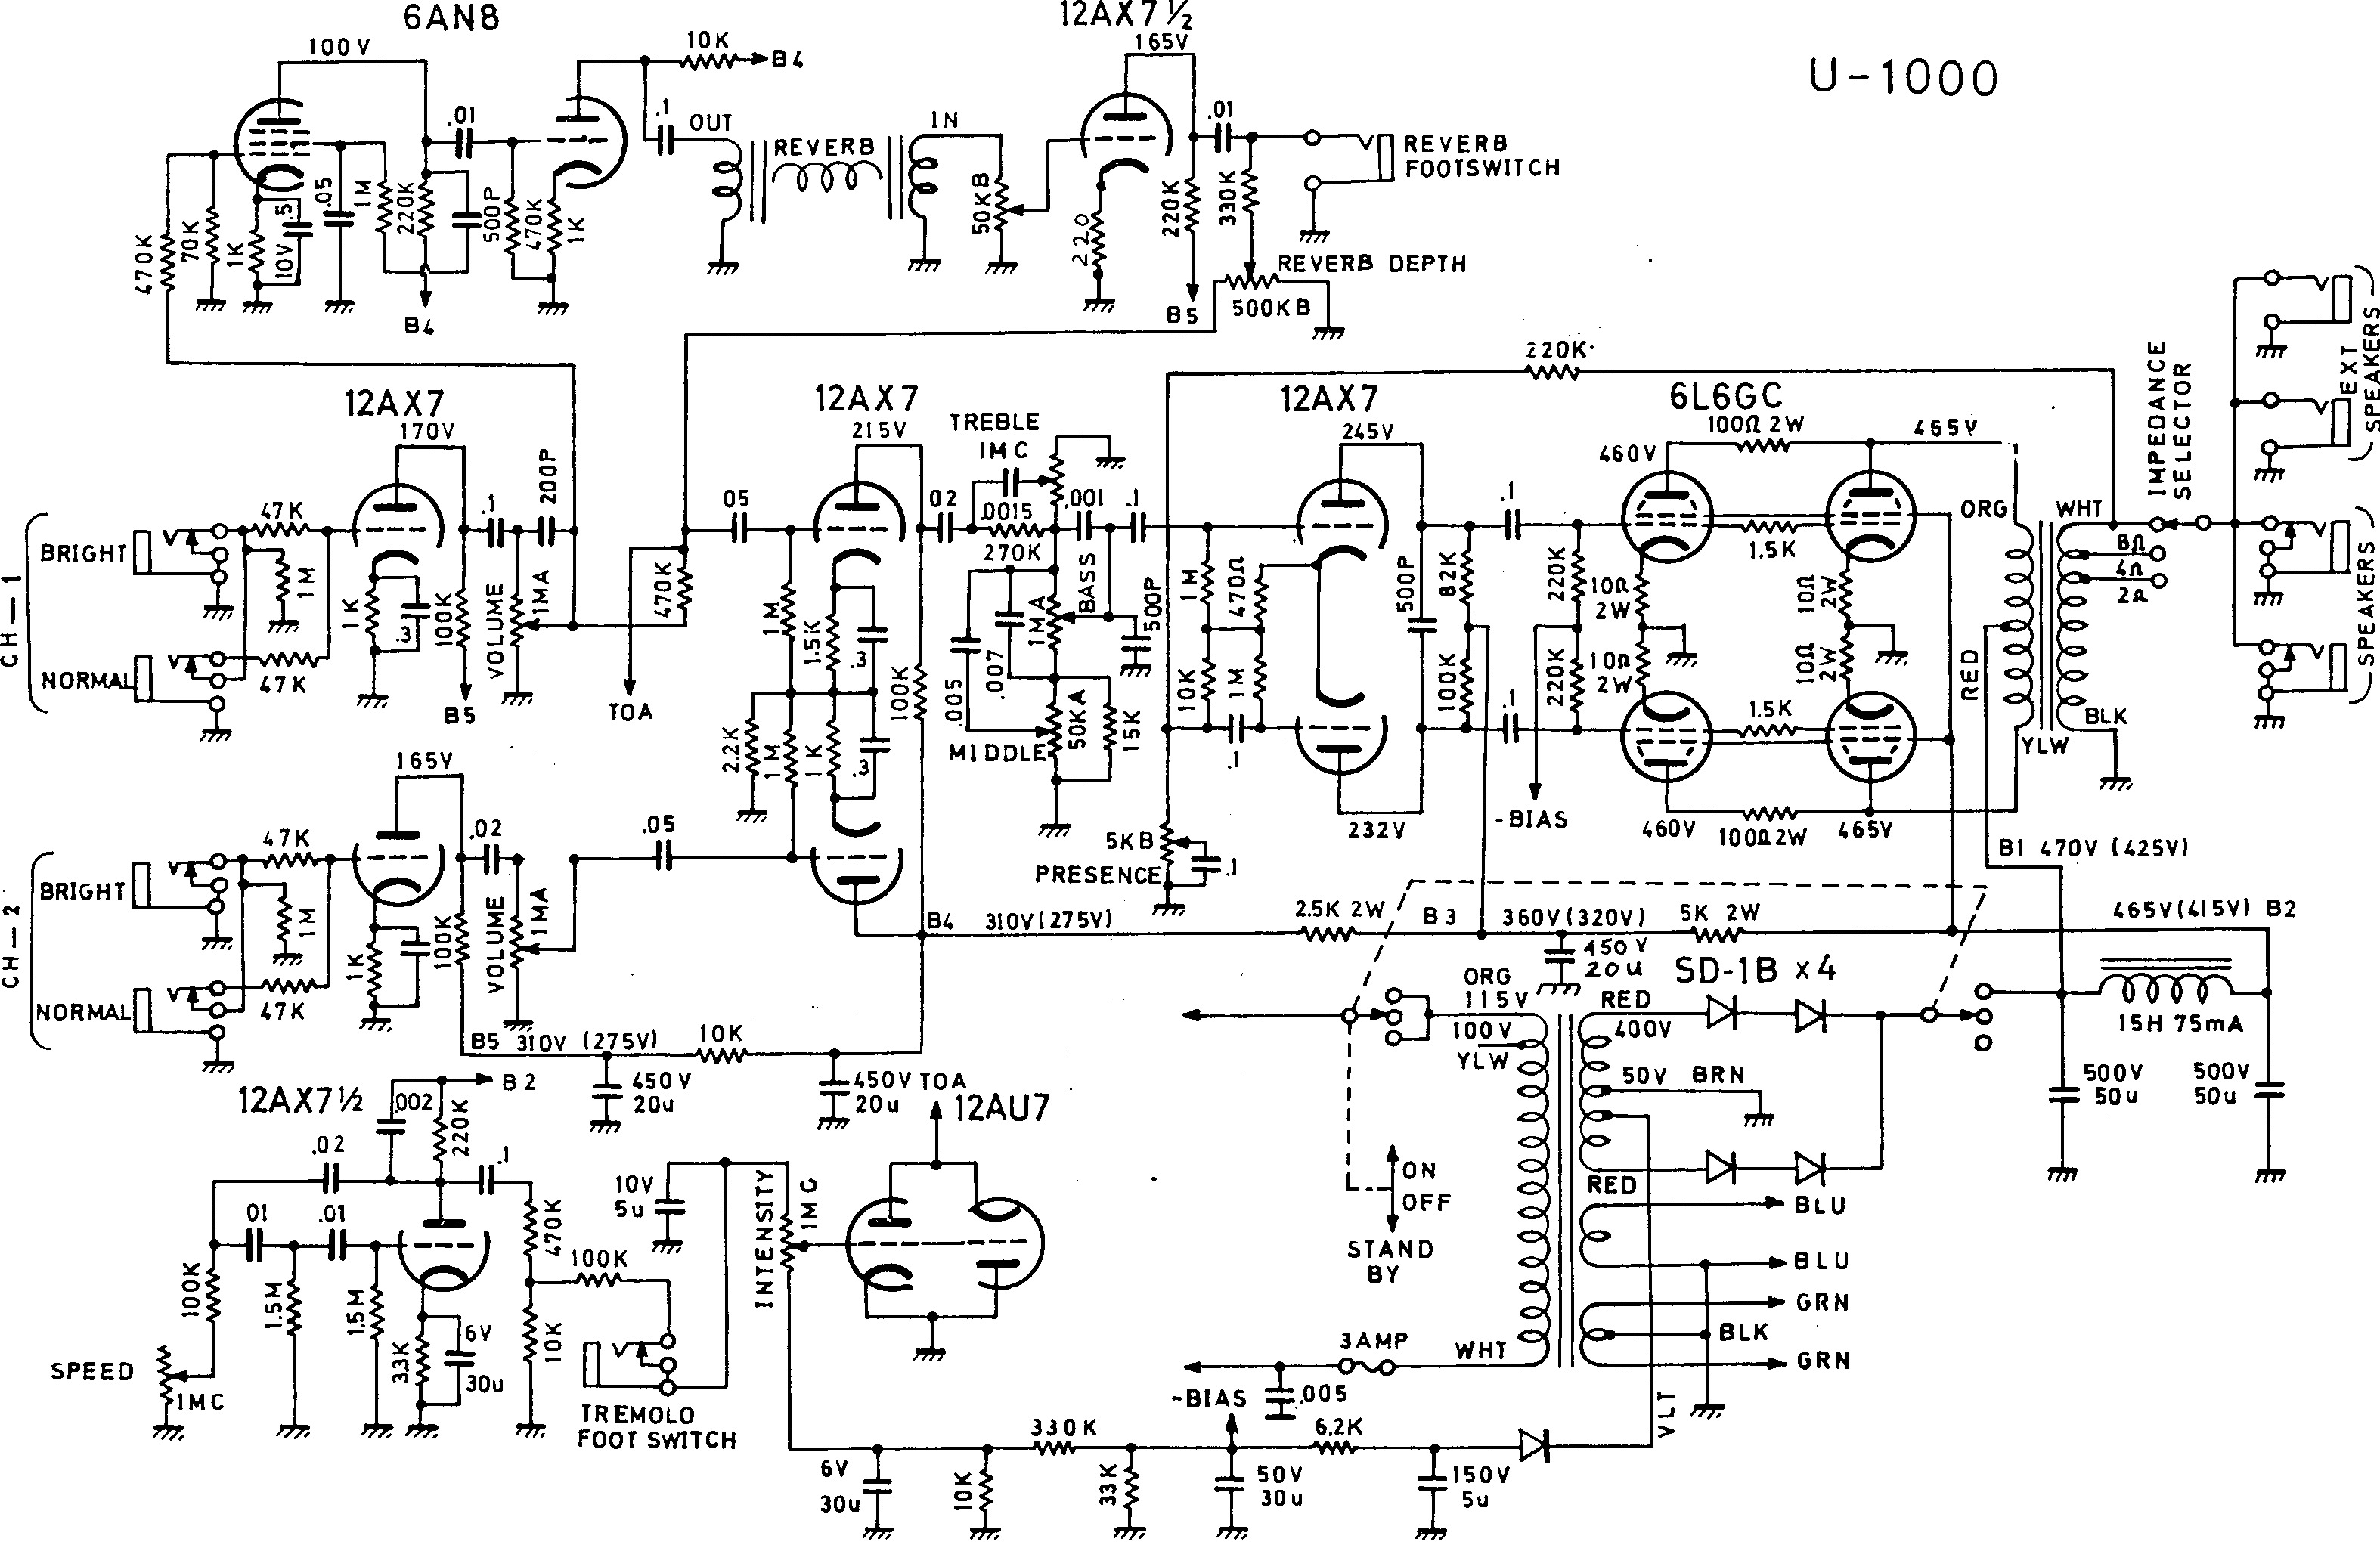 Univox U-1000 Amplifier Schematic.gif